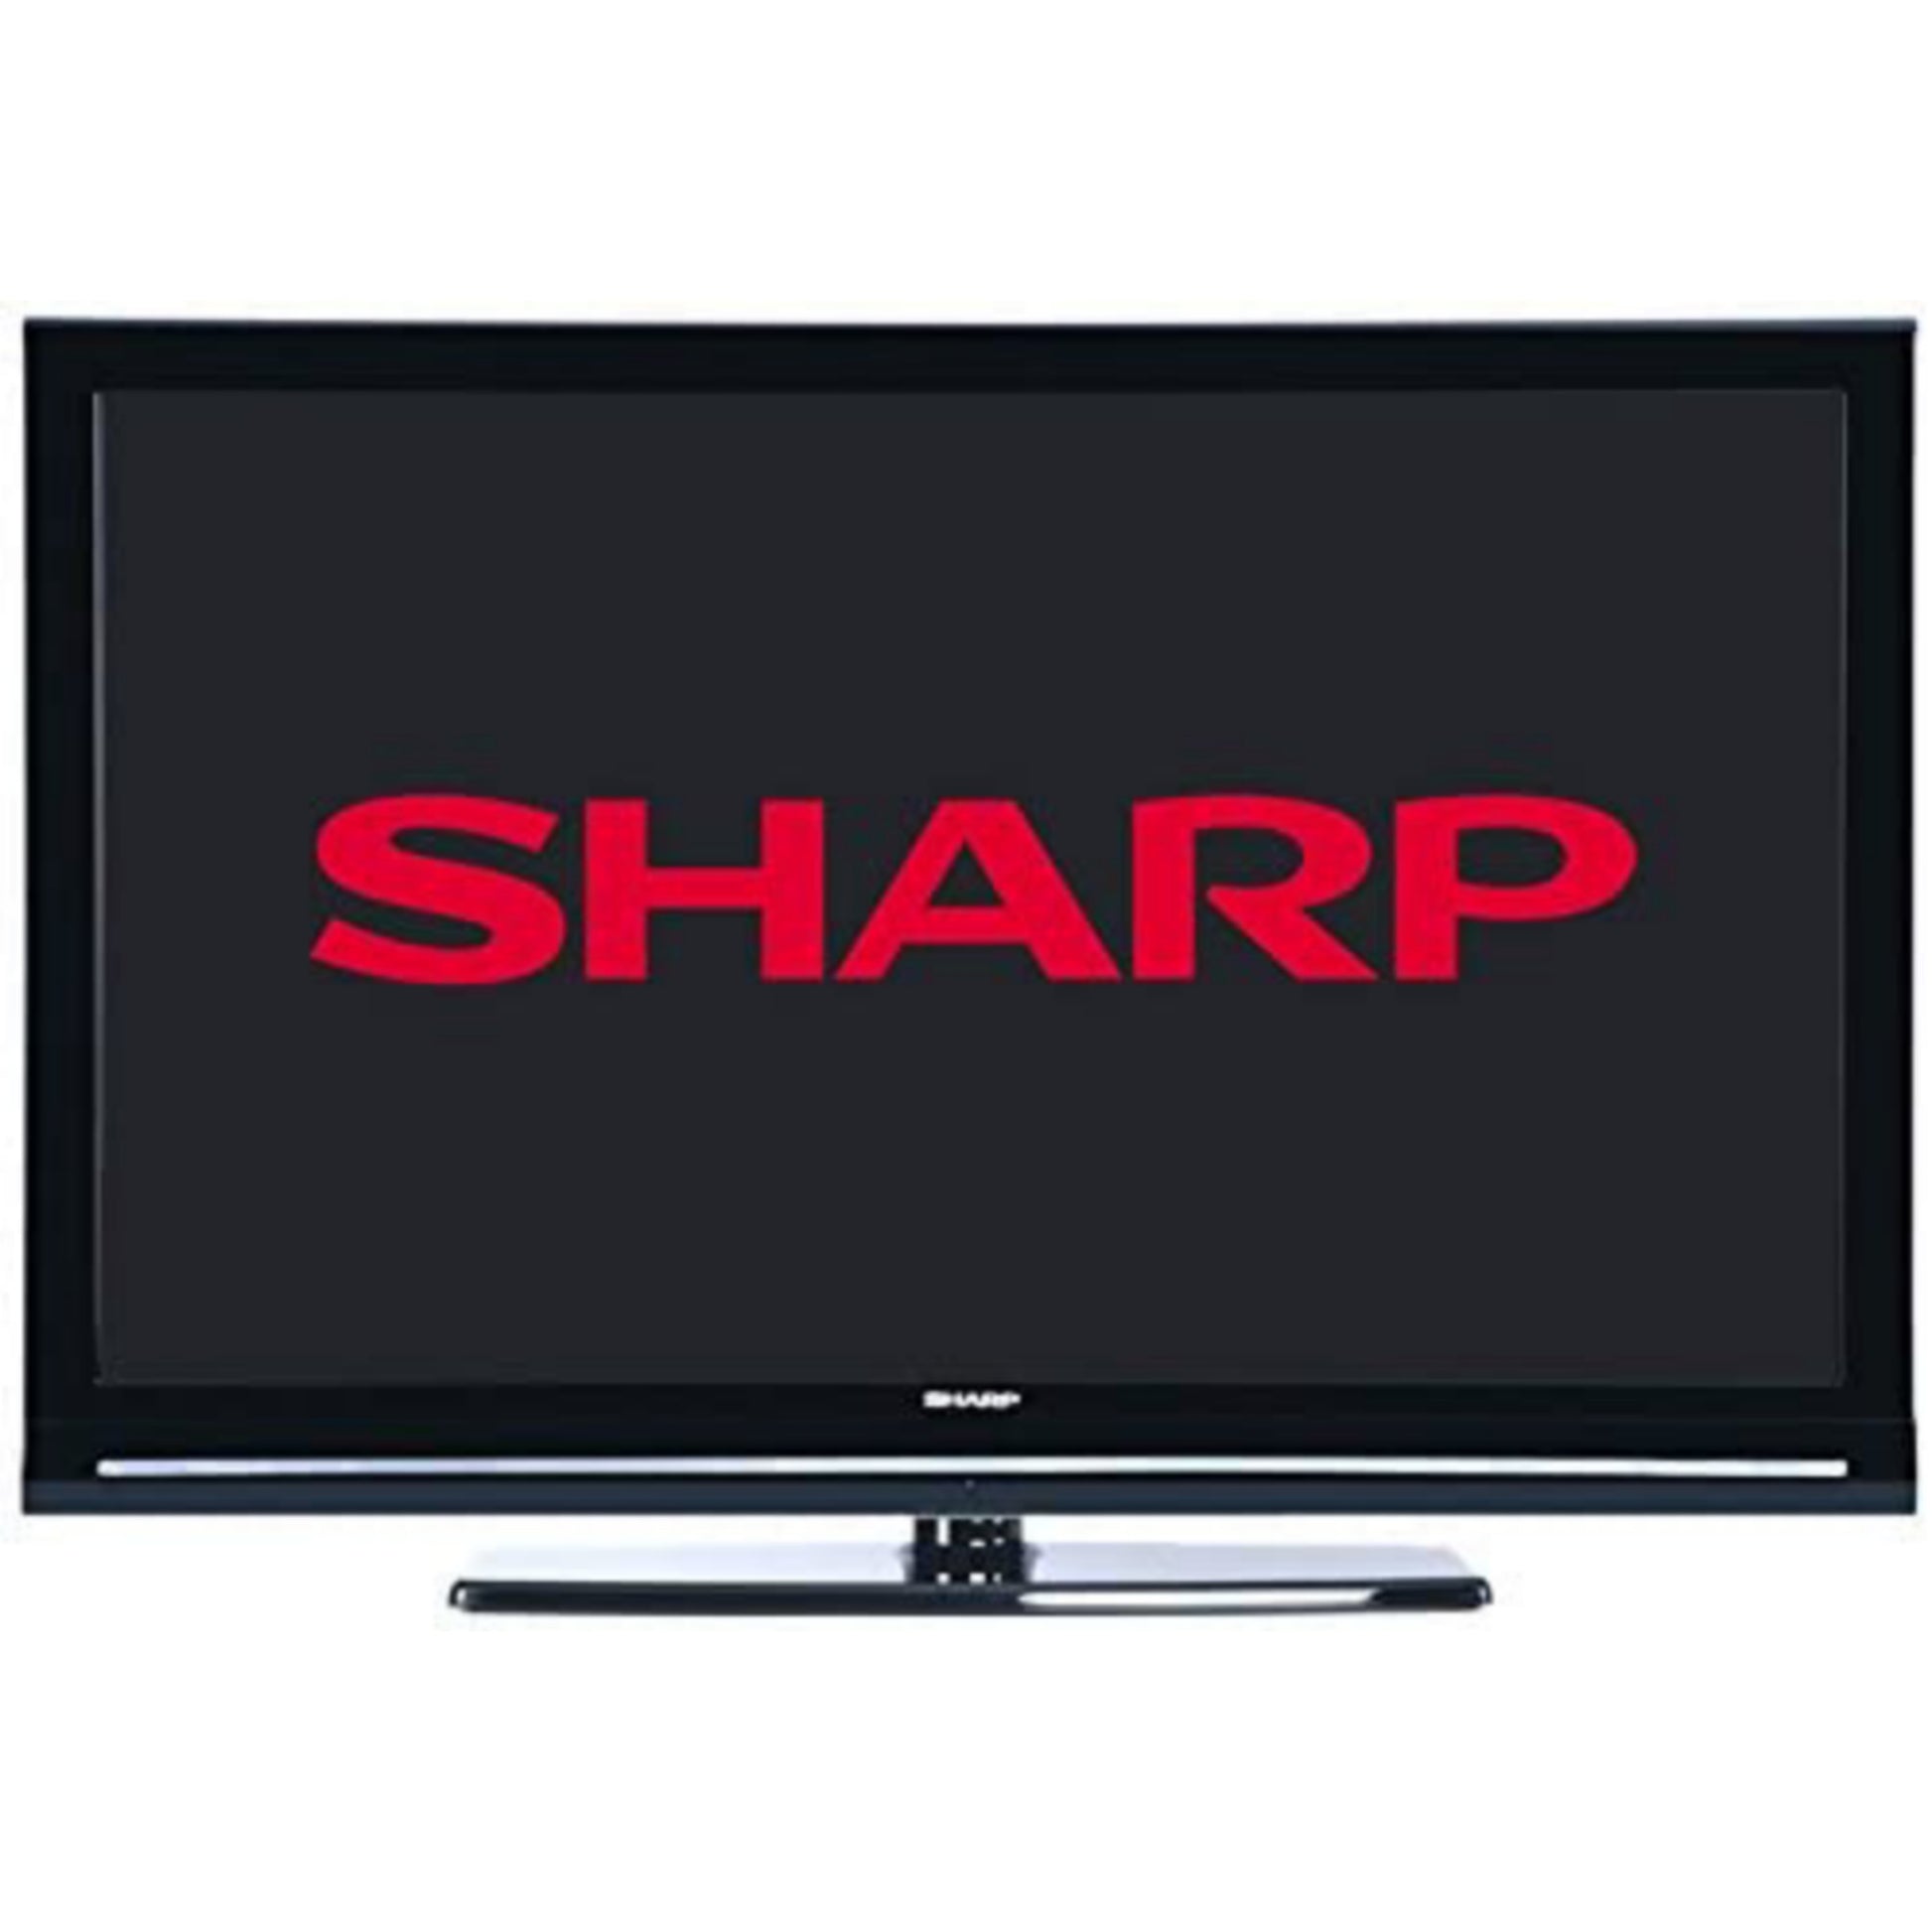 SHARP 22 Inch HD Ready LCD TV - London Used